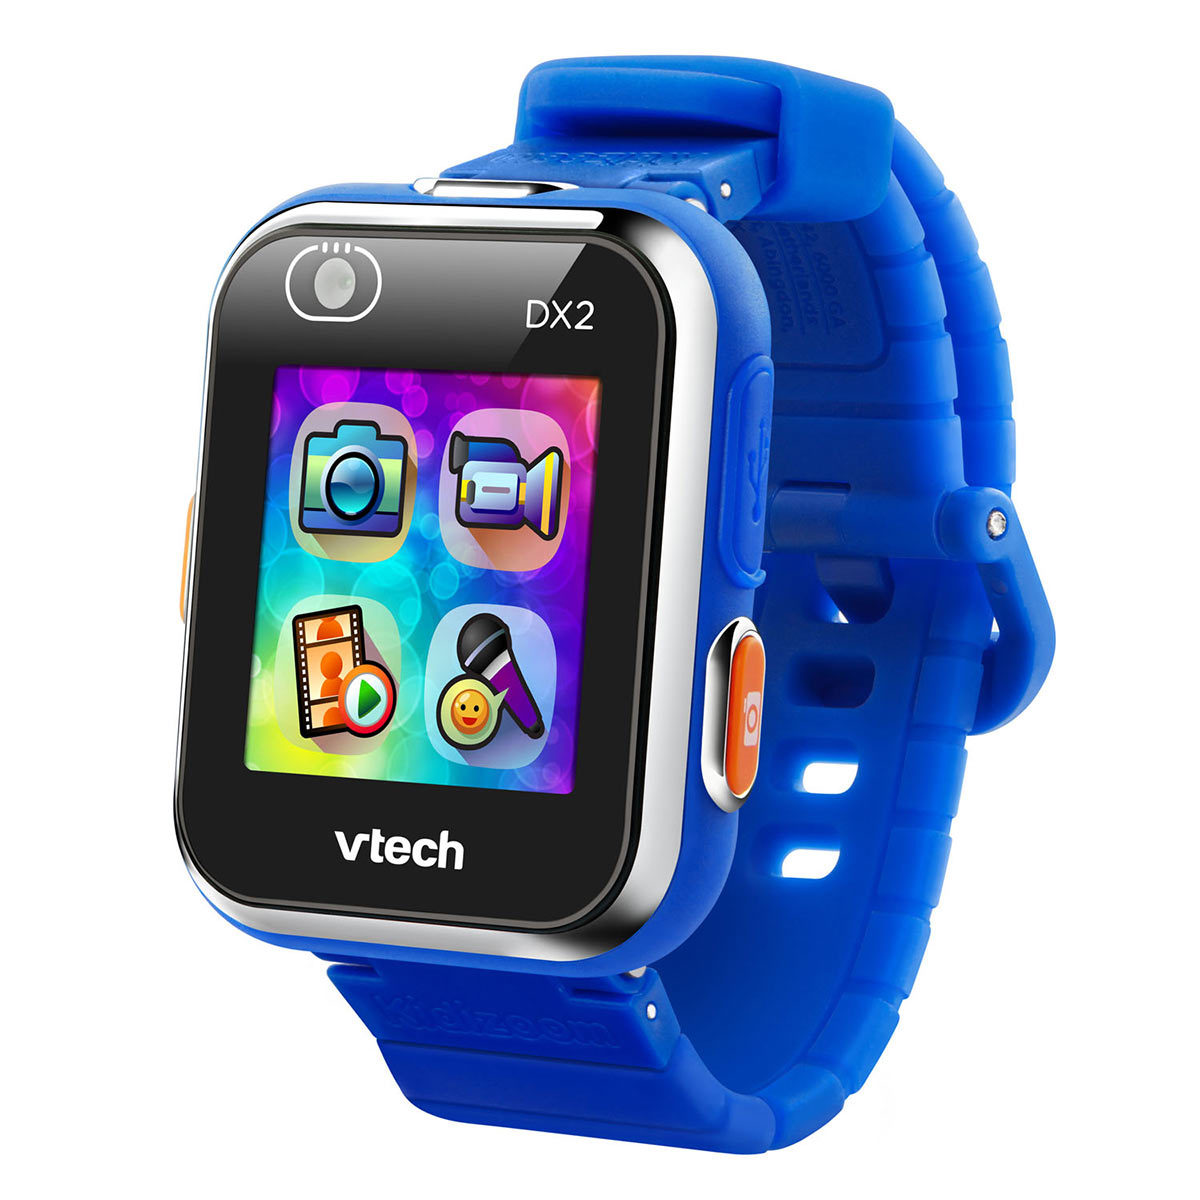 VTech Kidizoom DX2 Smart Watch in Blue (4+ Years)